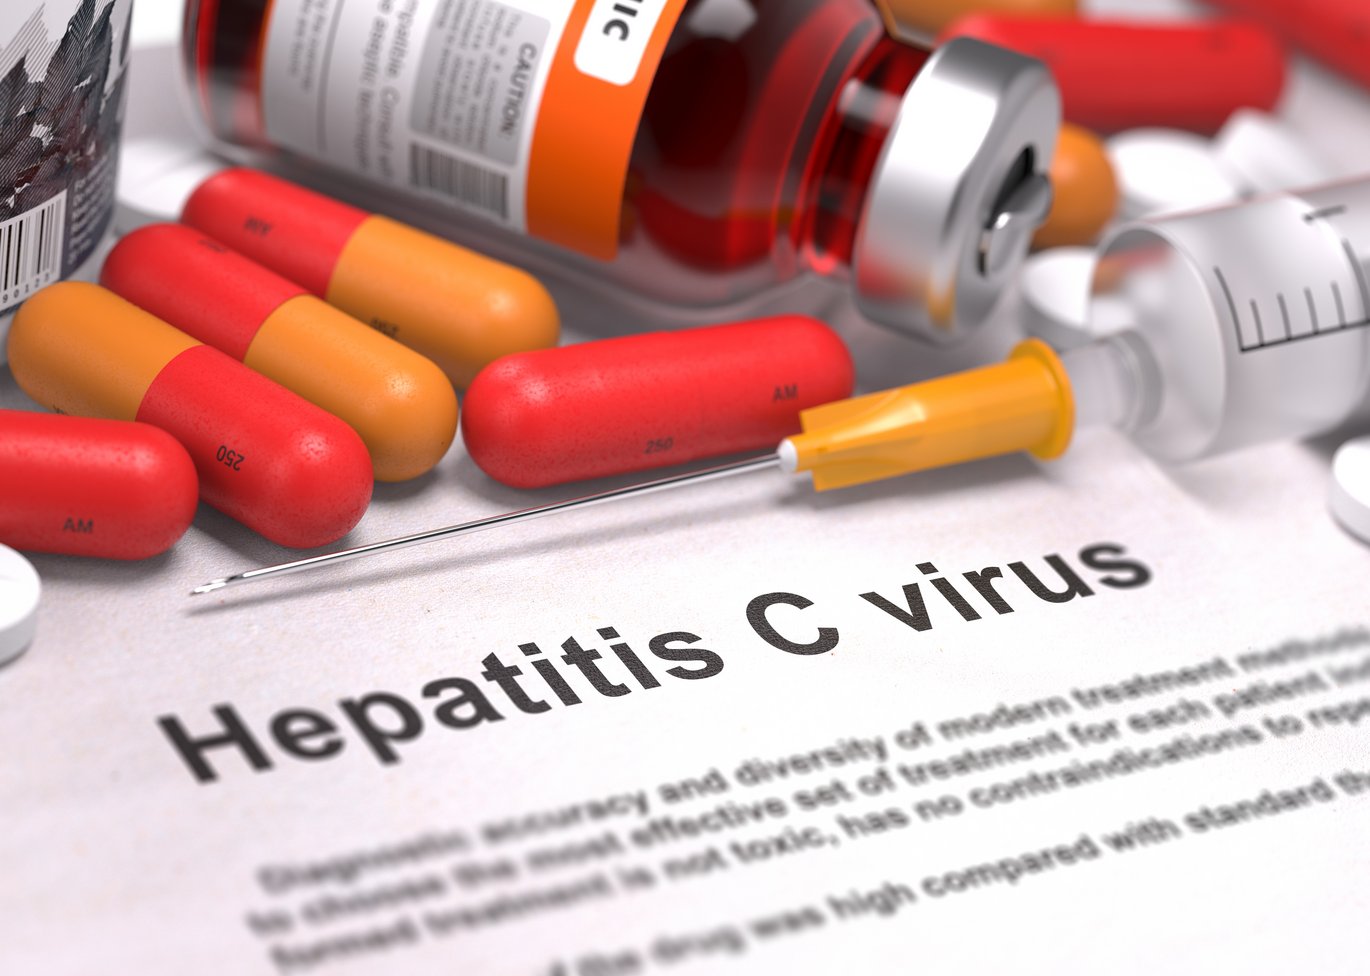 [Translate to English:] Medicin mod hepatitis C